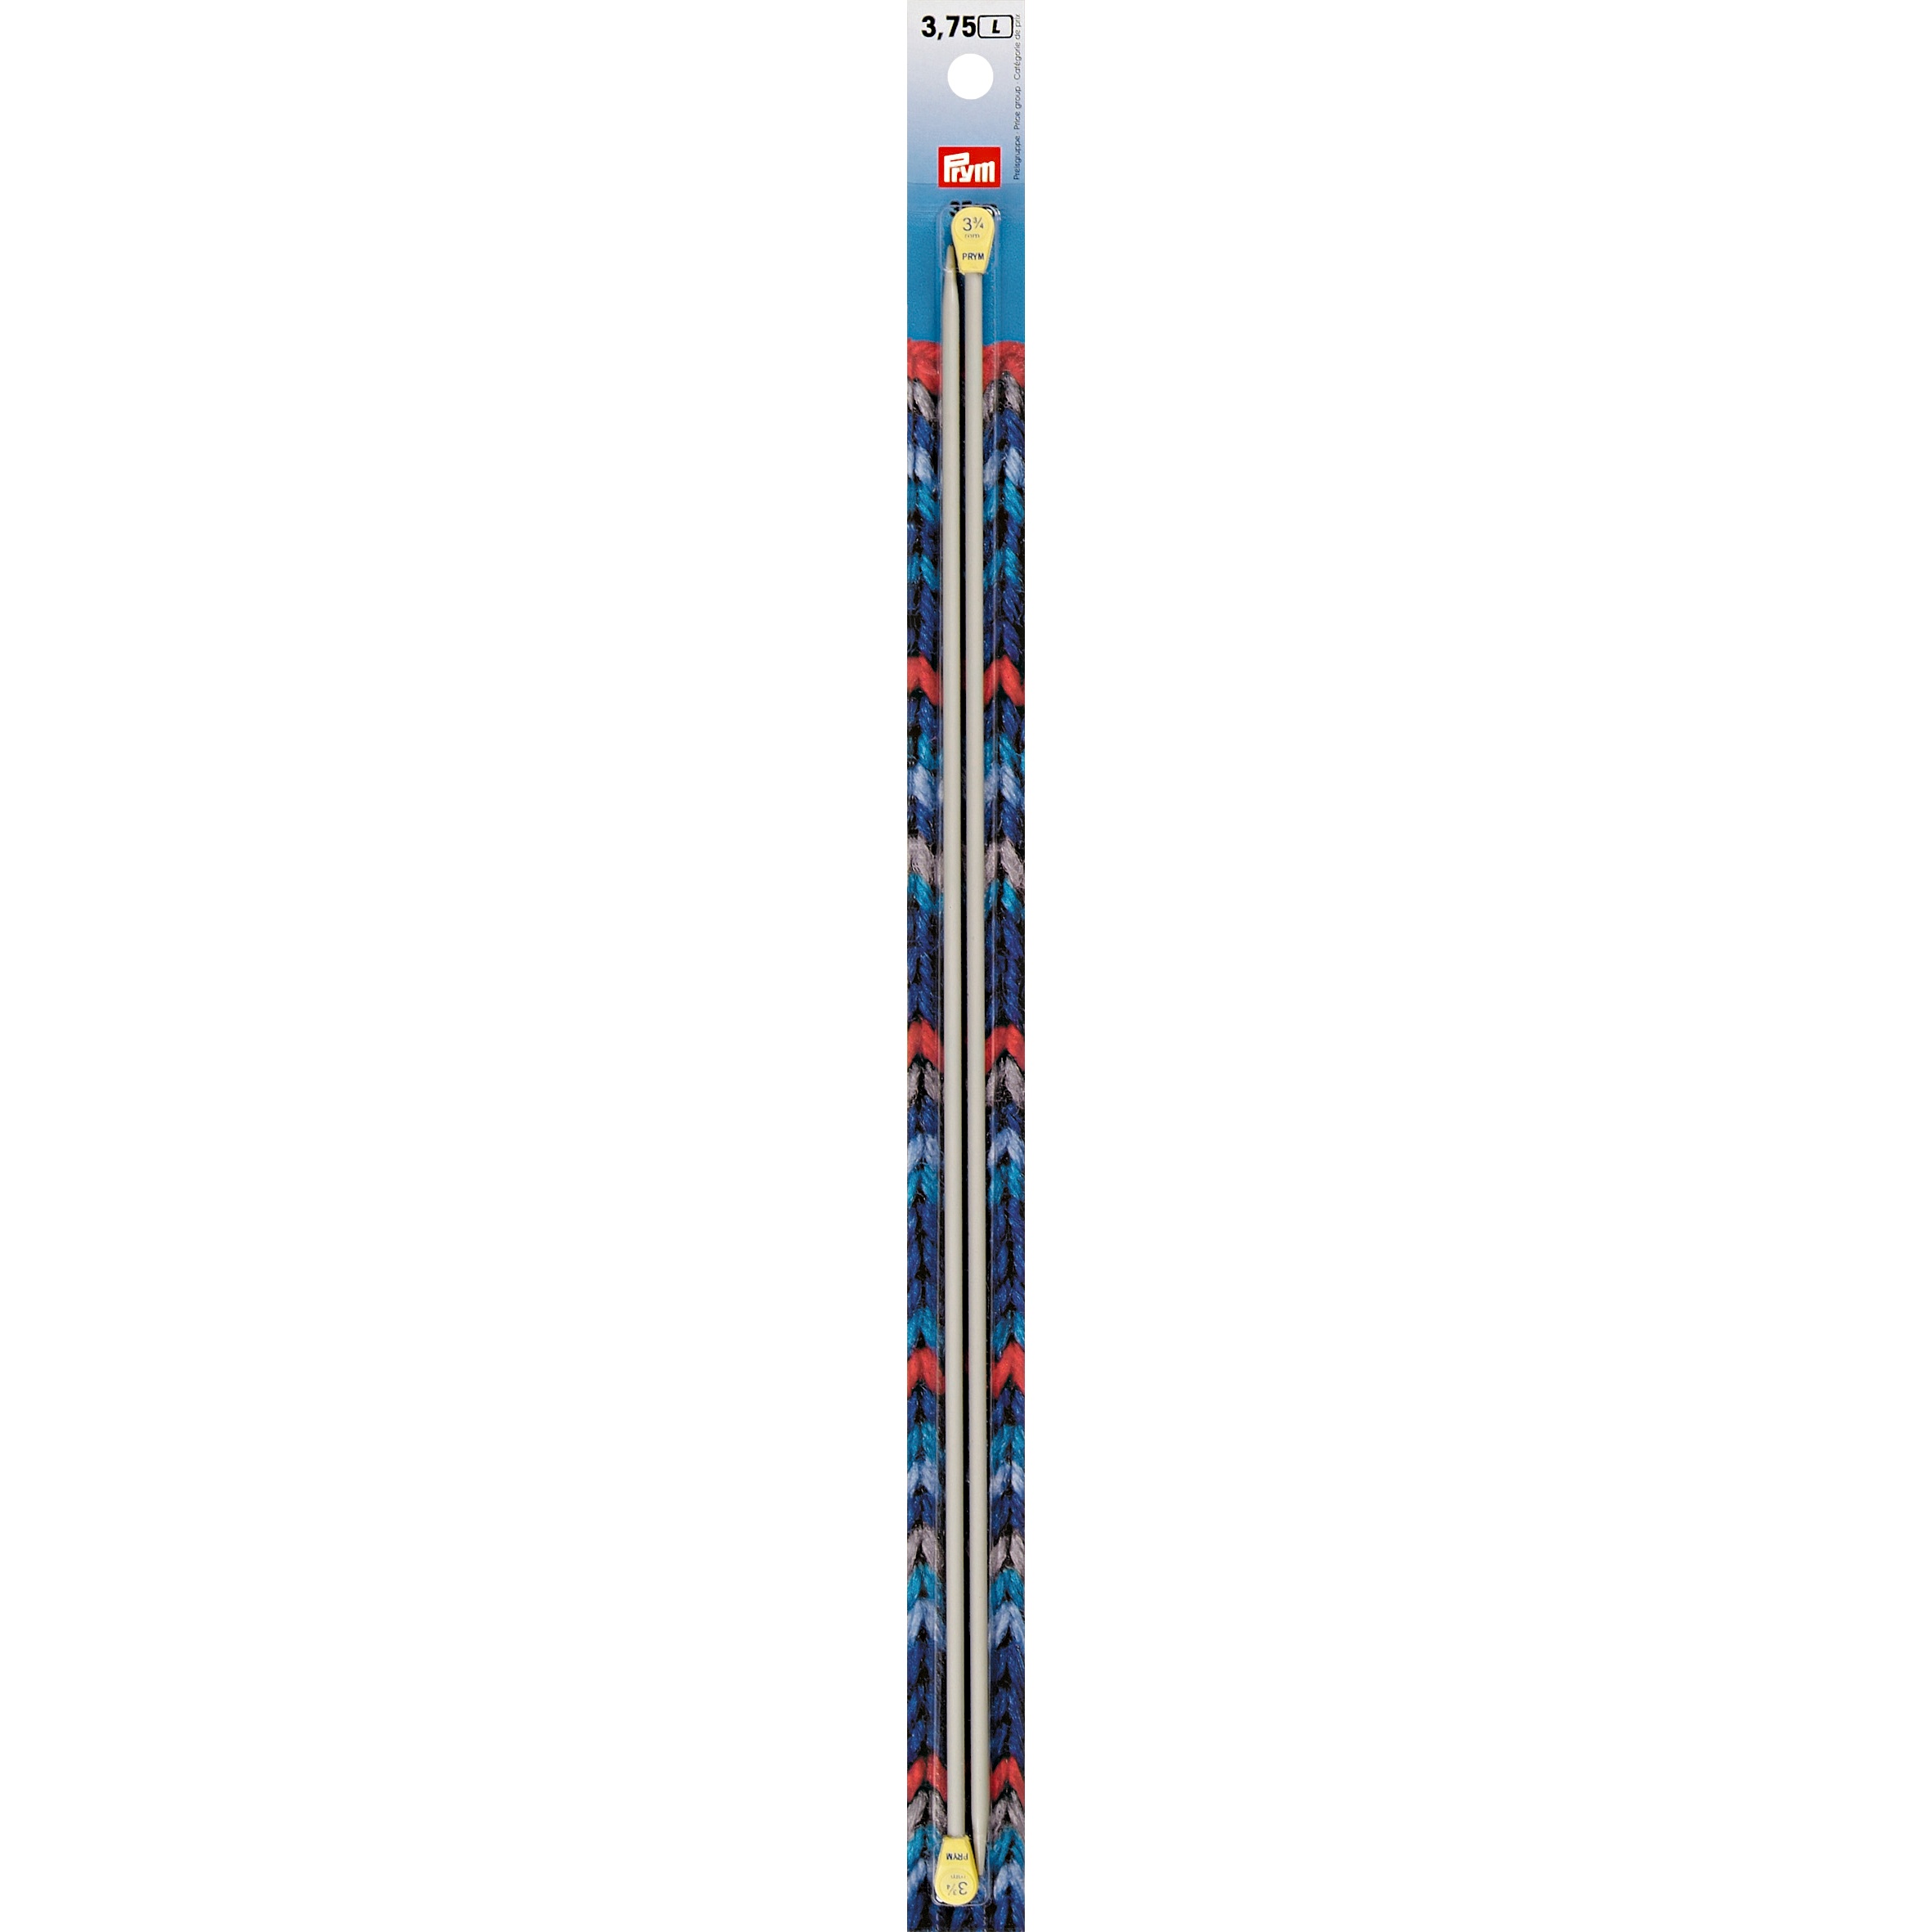 Knitting Needles - 3.75mm Straight 35cm Long by Prym 191 460